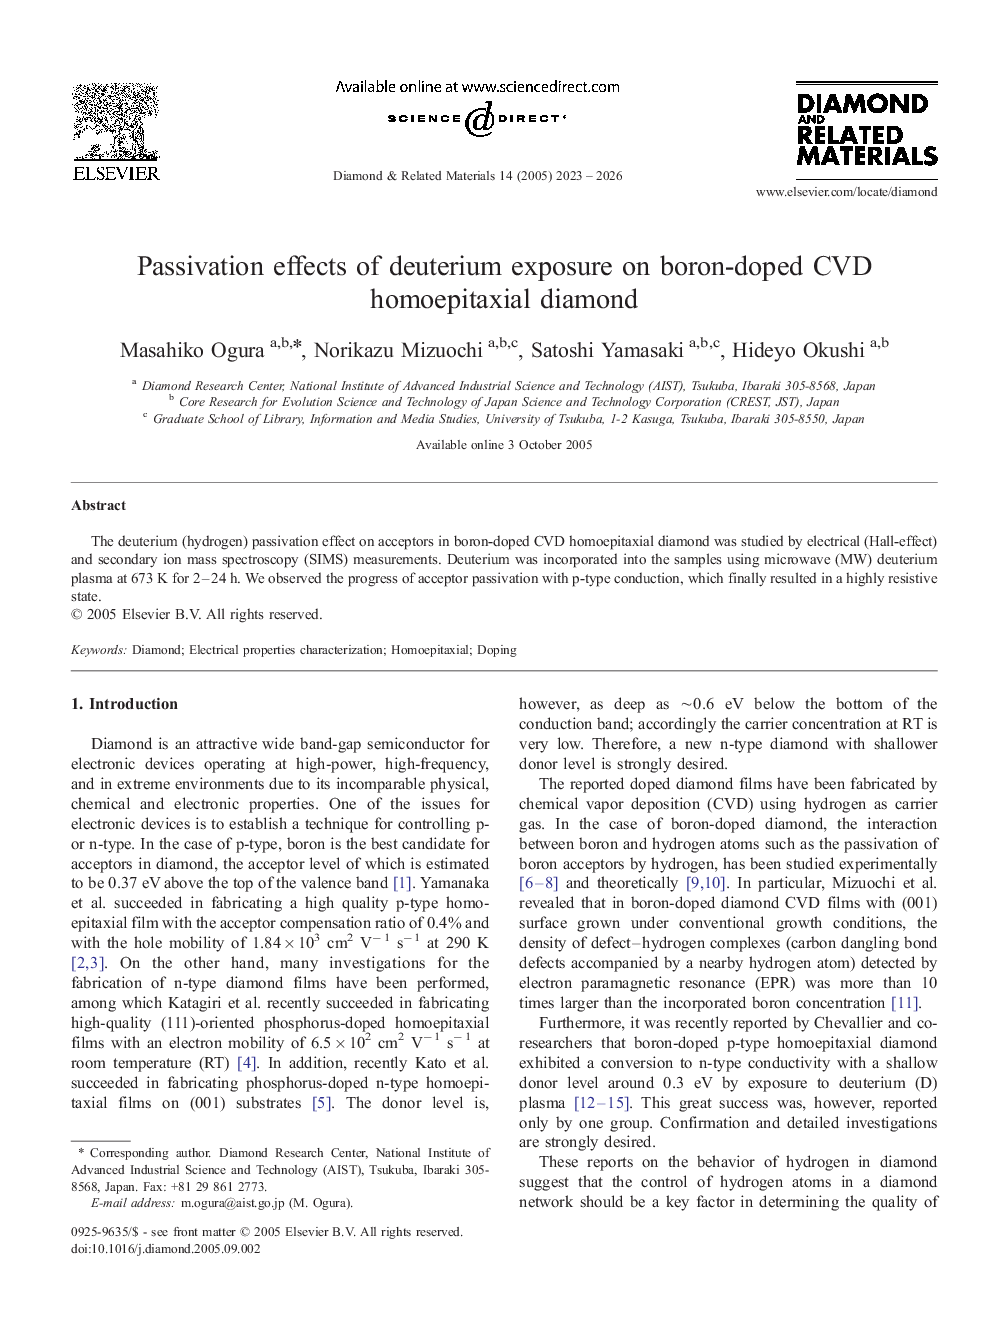 Passivation effects of deuterium exposure on boron-doped CVD homoepitaxial diamond